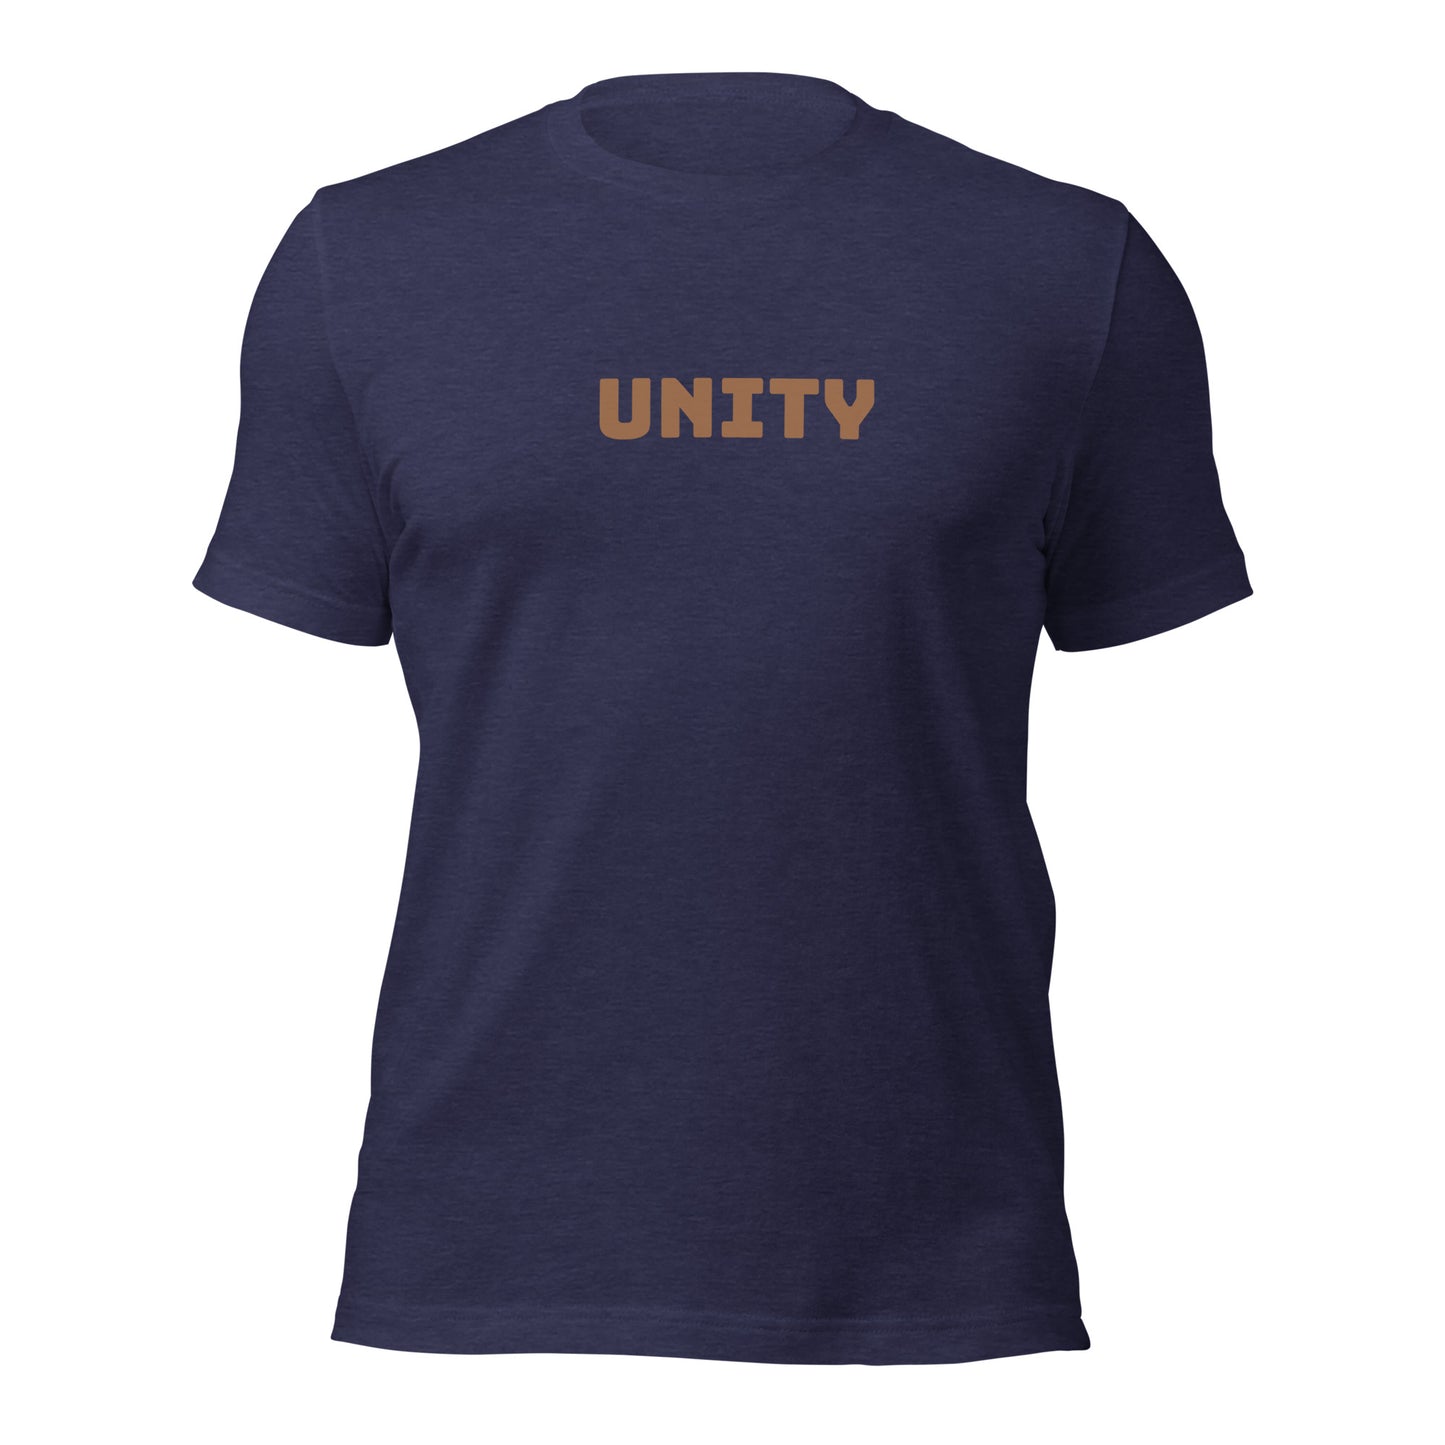 Unity t-shirt